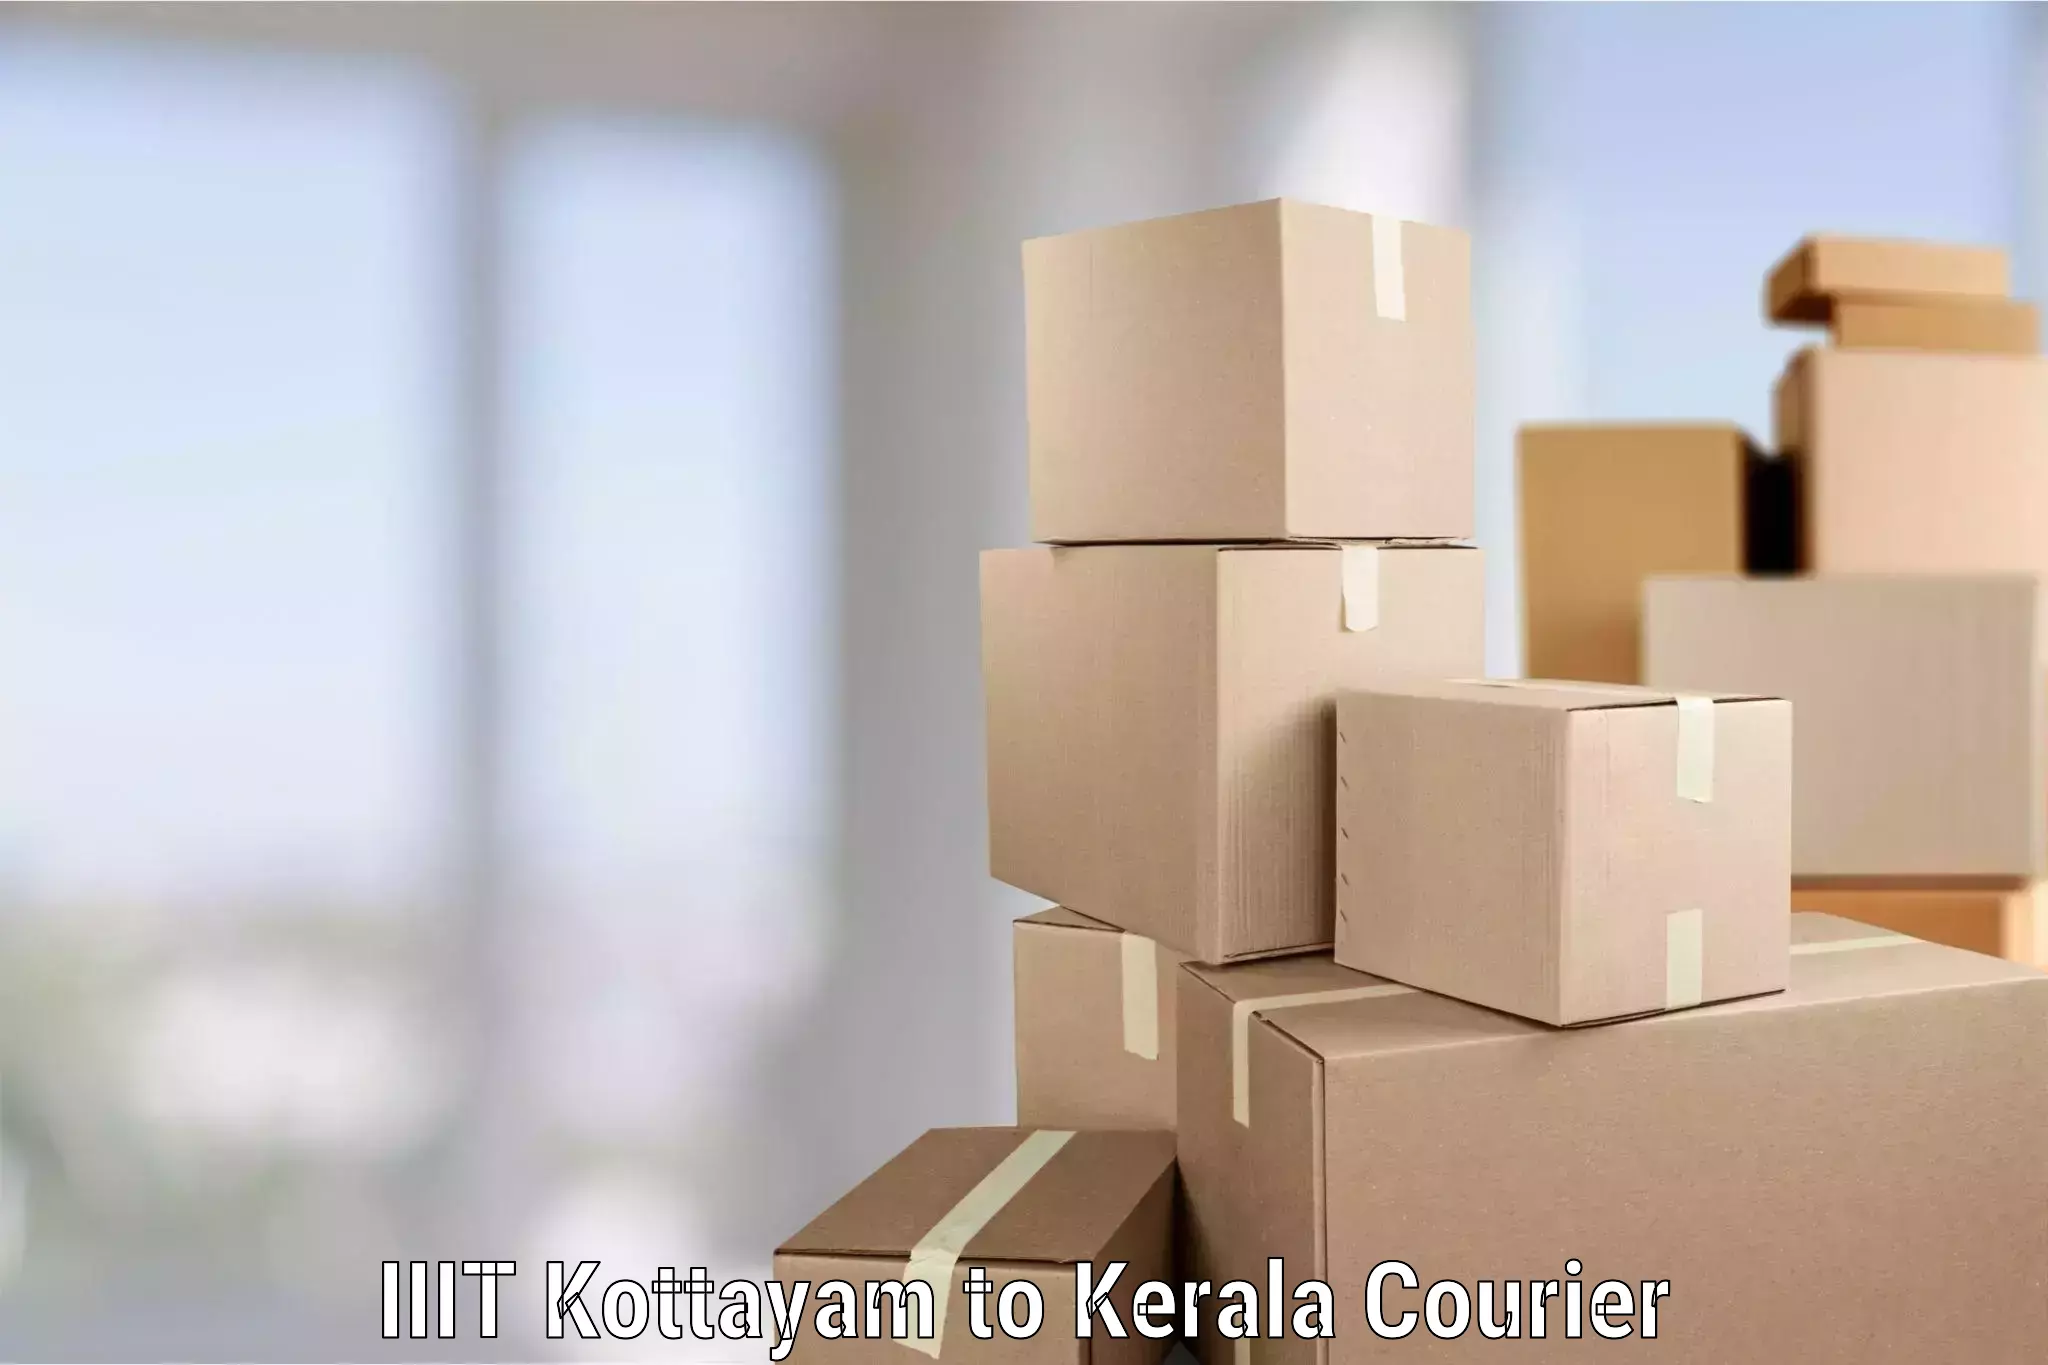 Professional moving company IIIT Kottayam to Kerala